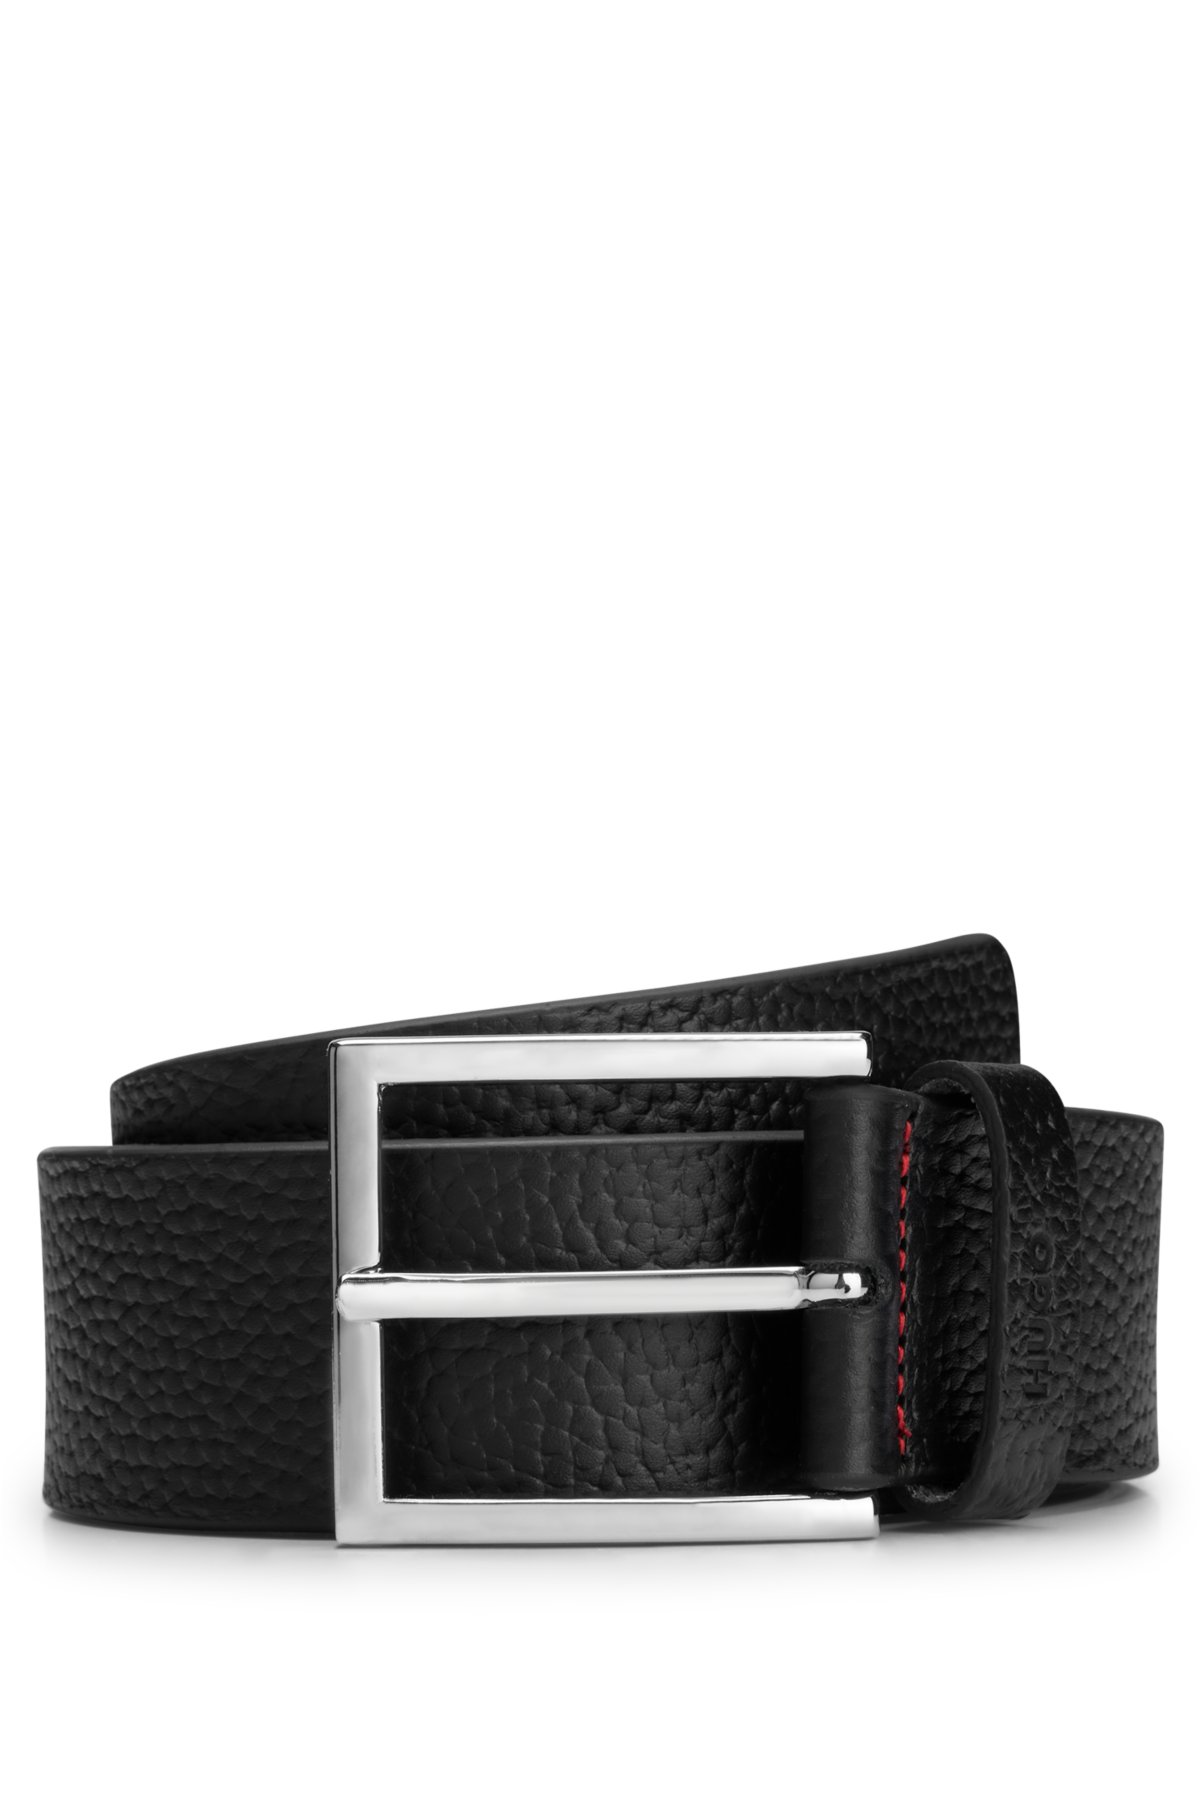 LV belt suitable for waist 32-34 (Men)